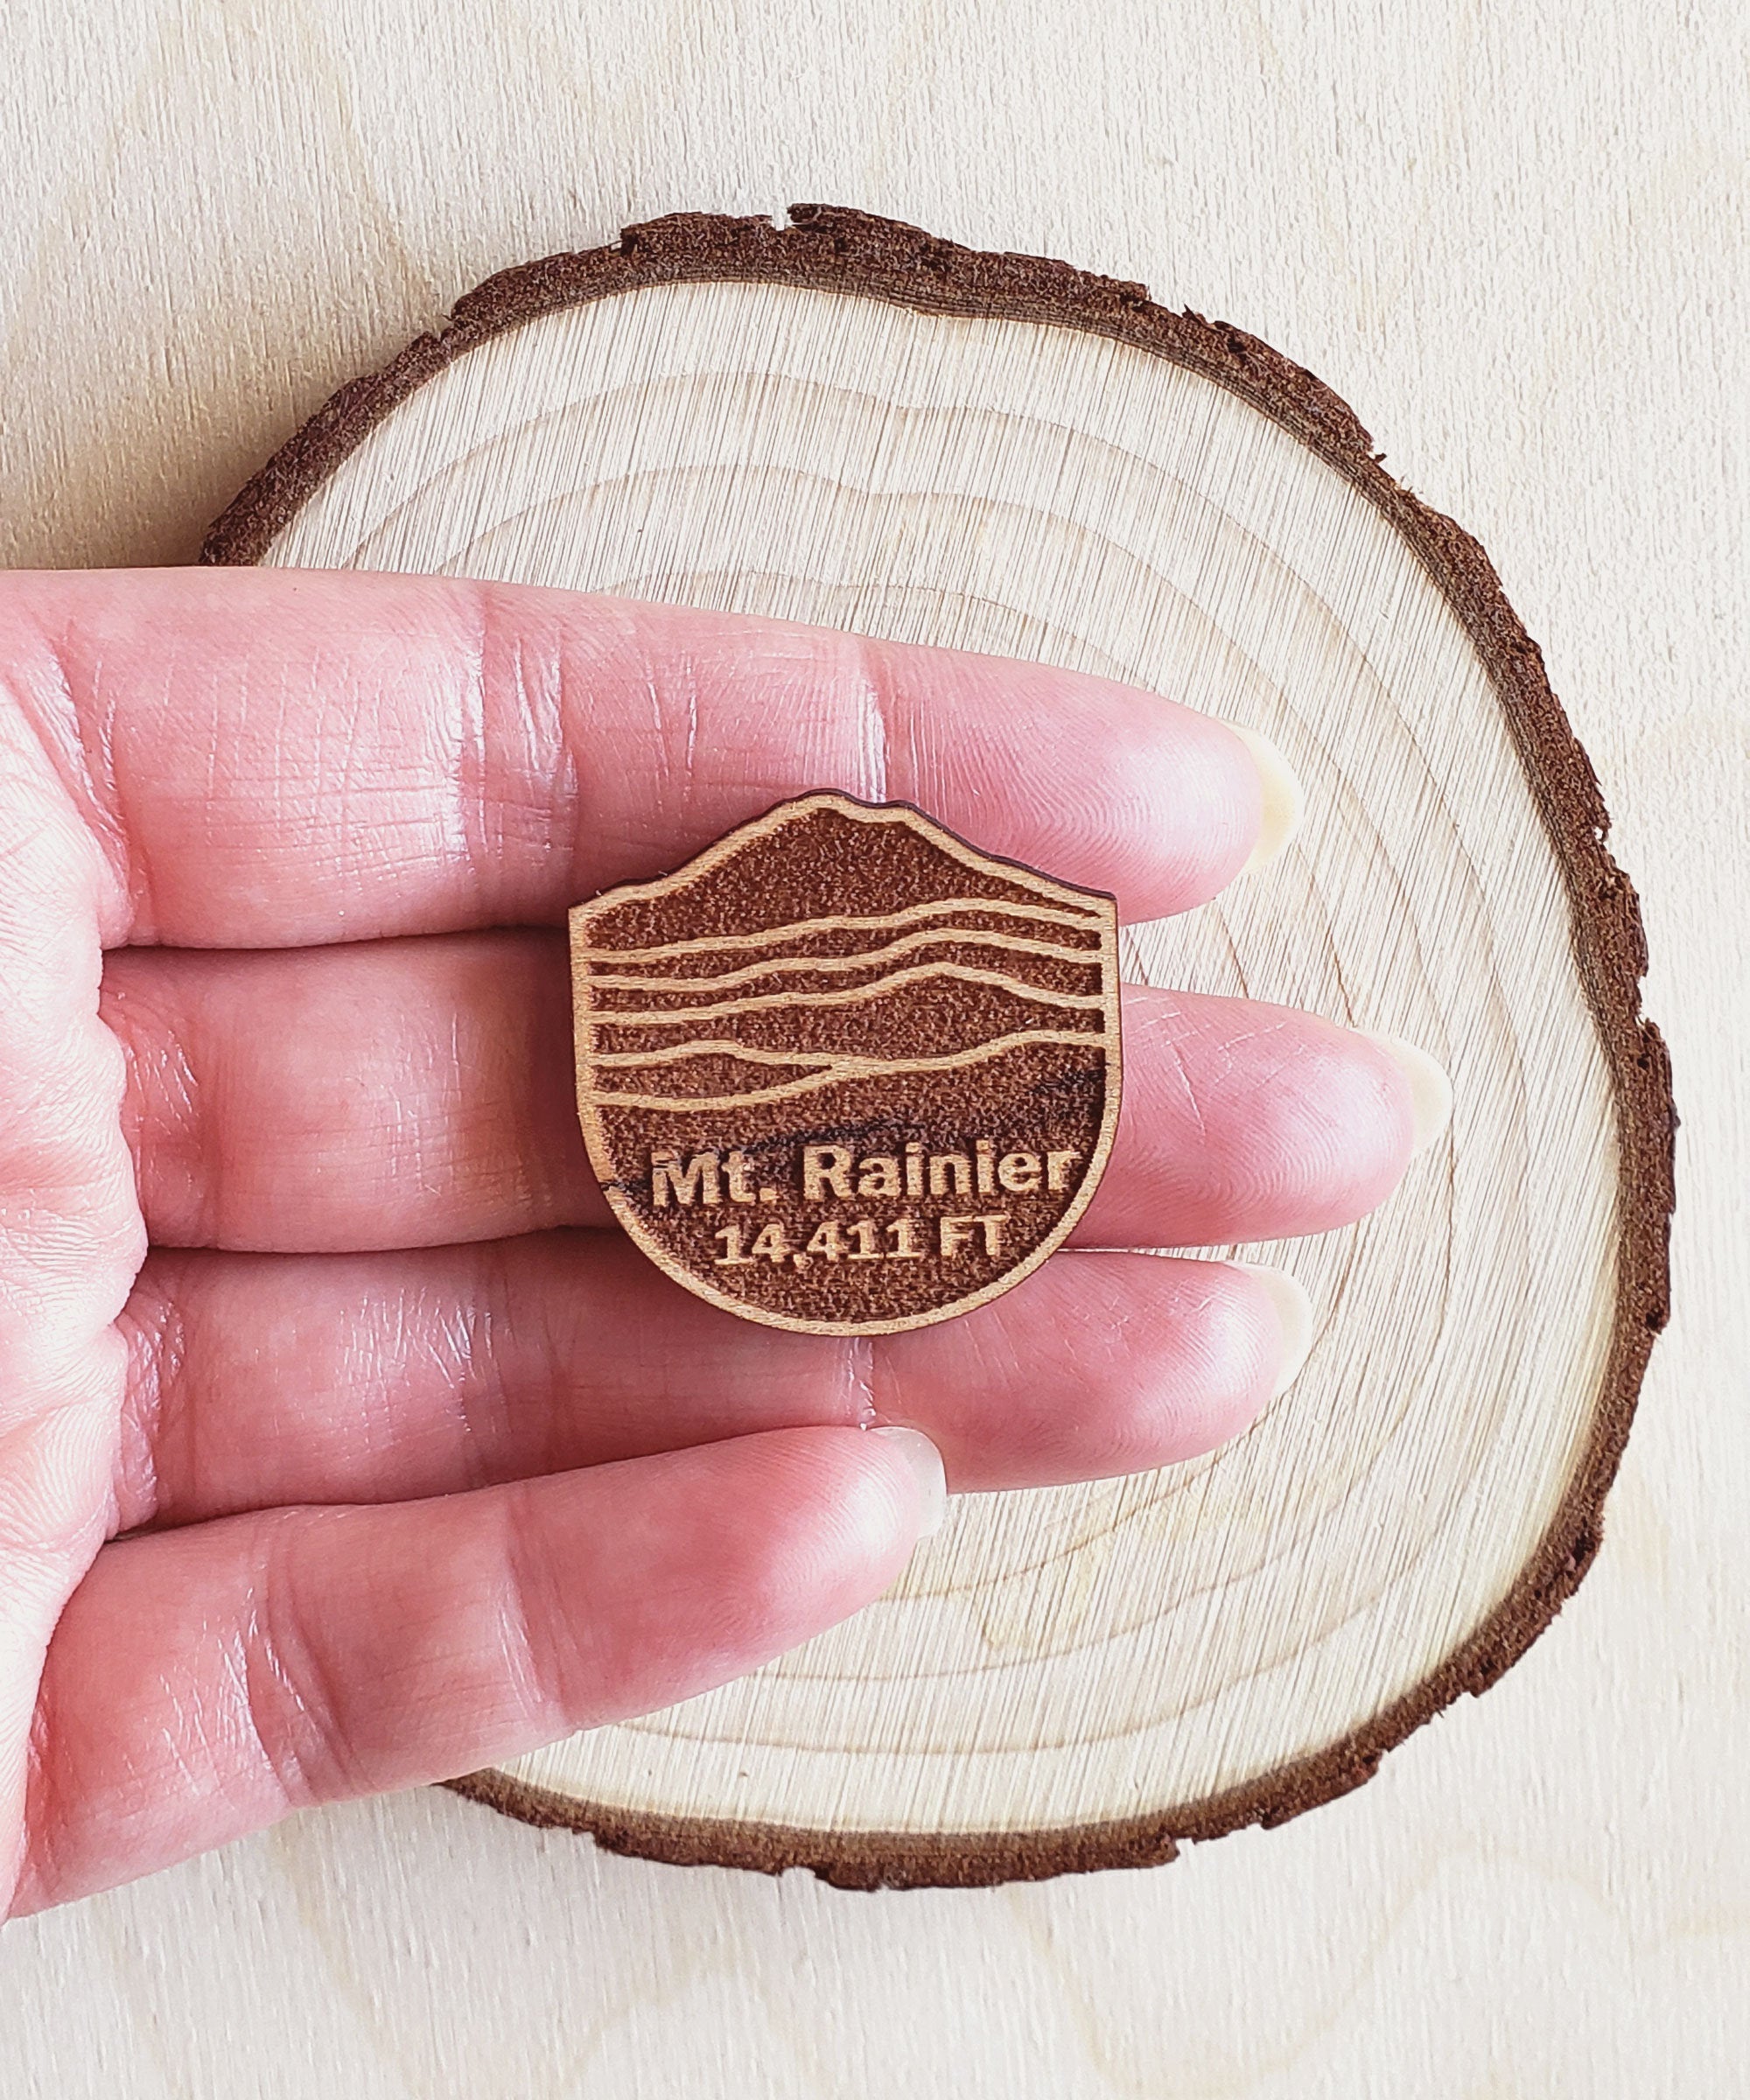 Mt Rainier Wooden Pin